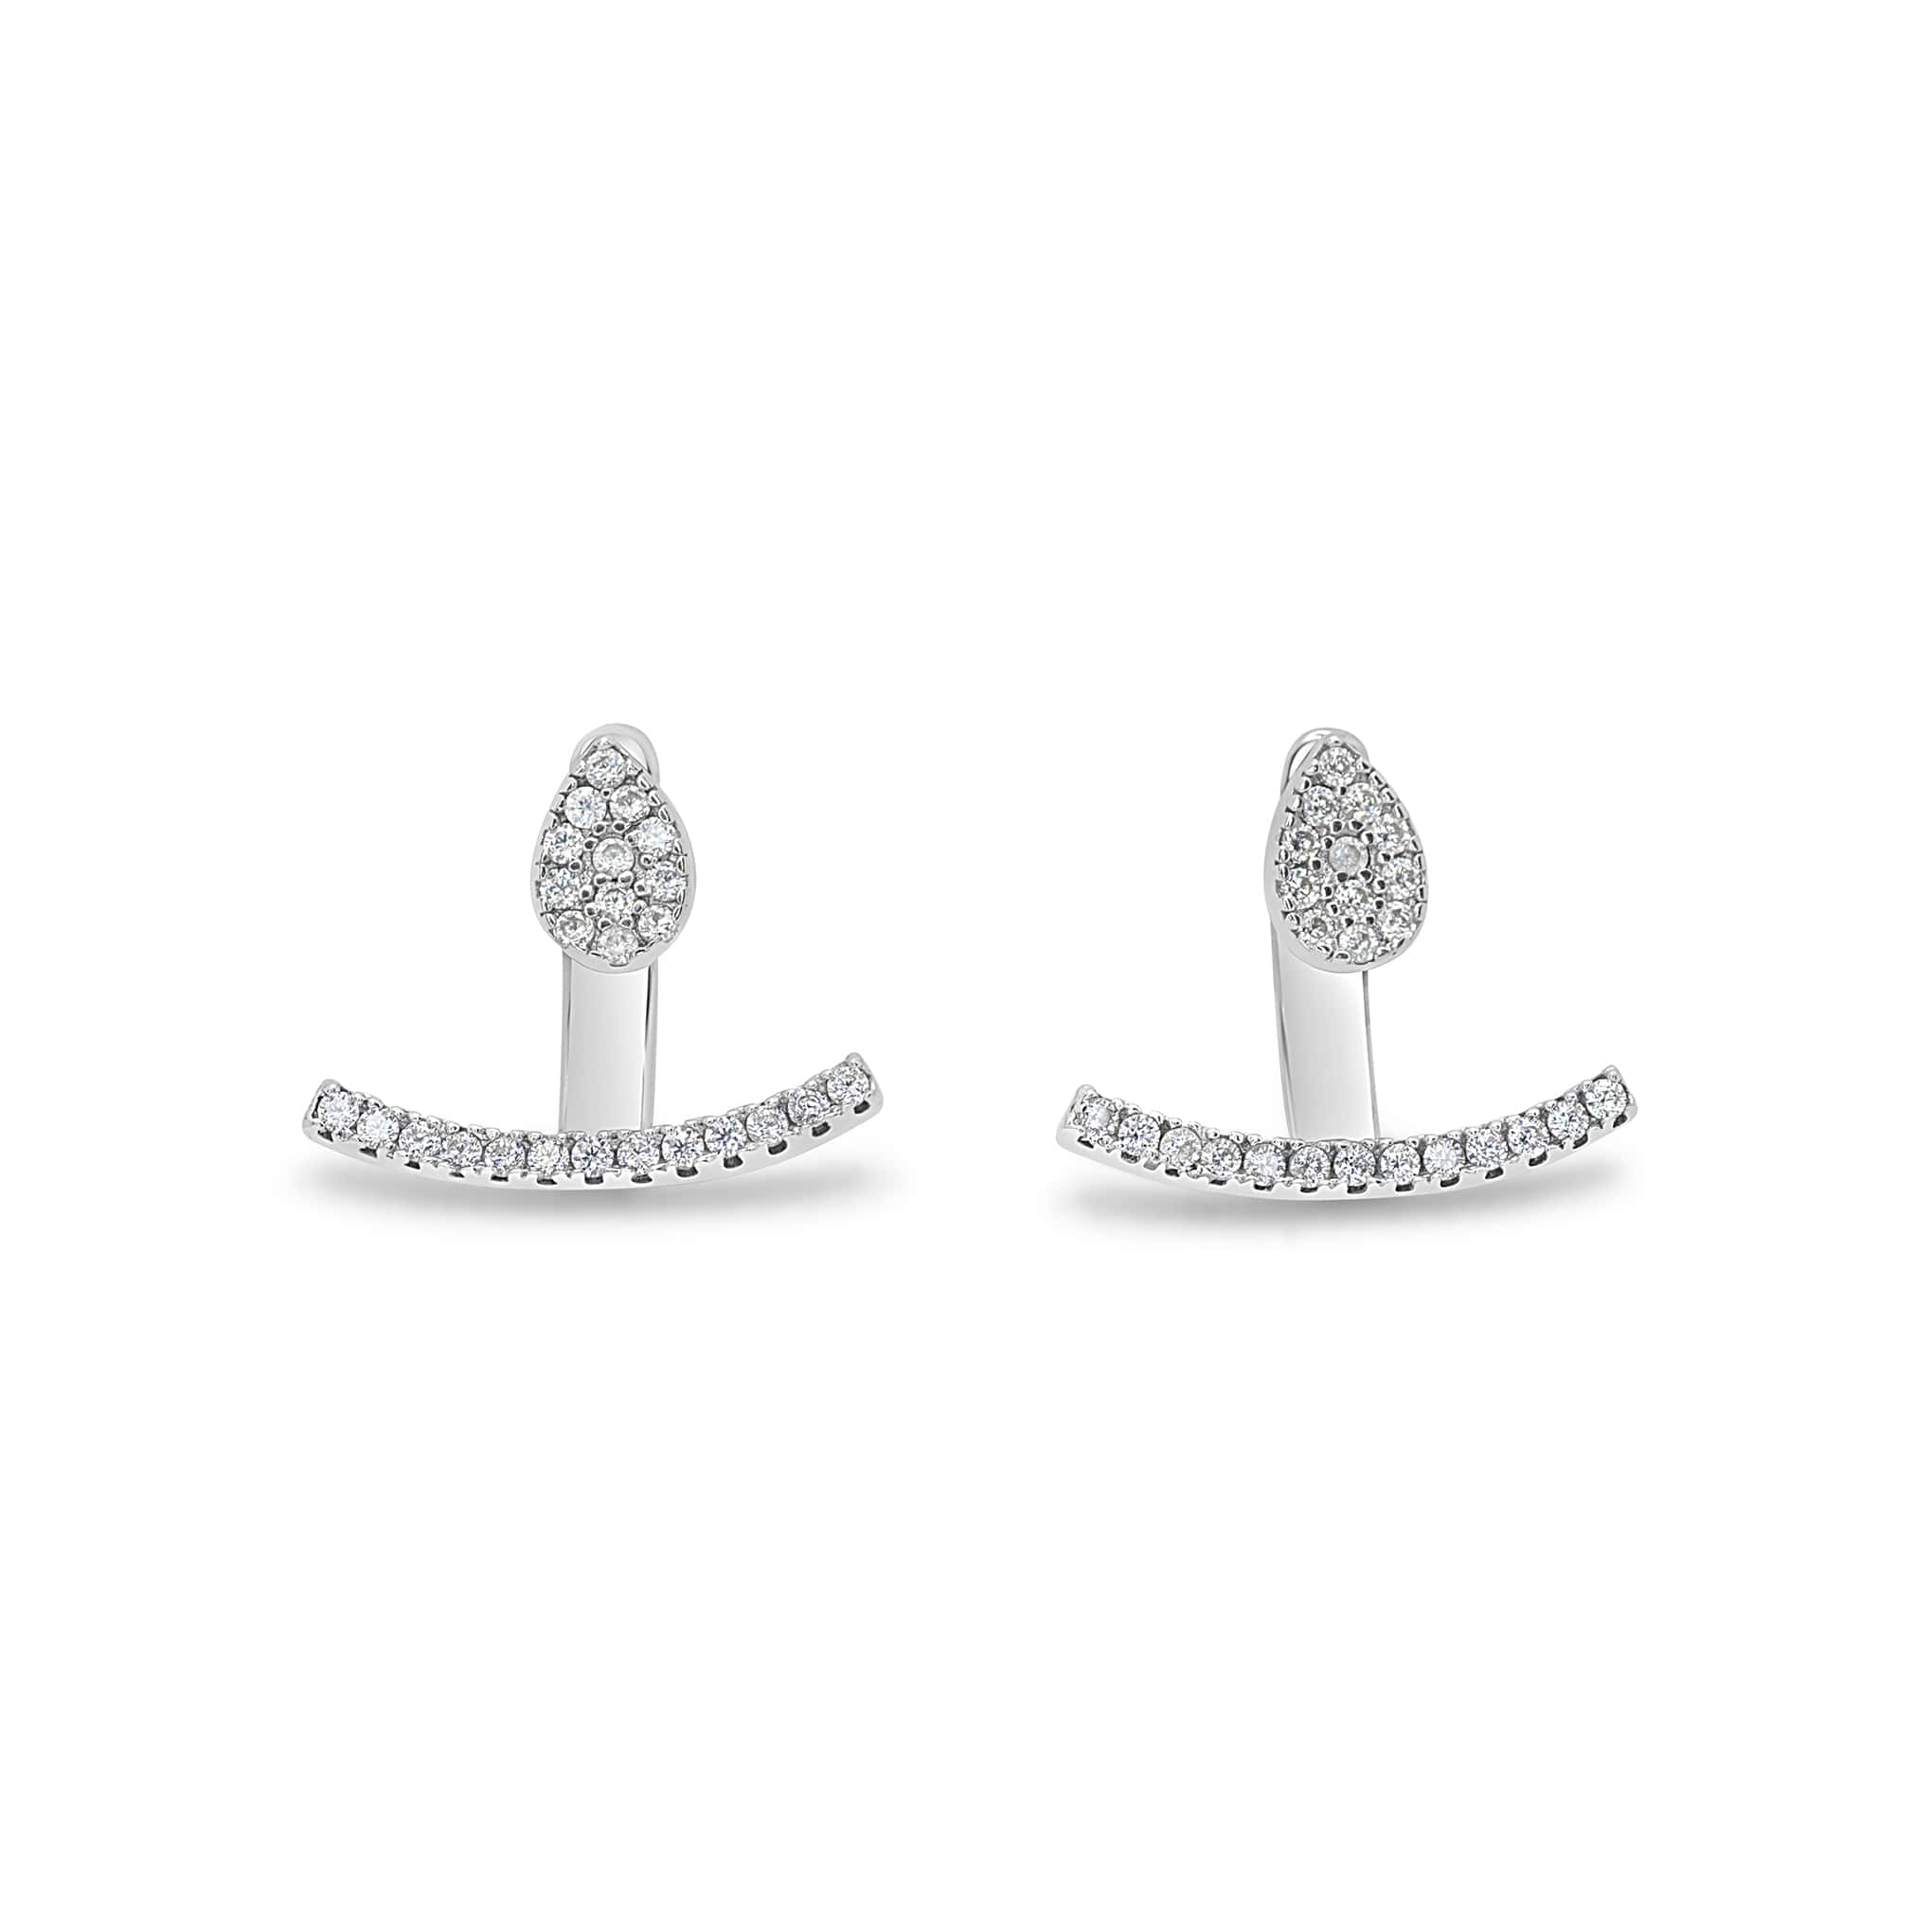 tear drop shaped earring with cubic zirconia cuff in silver